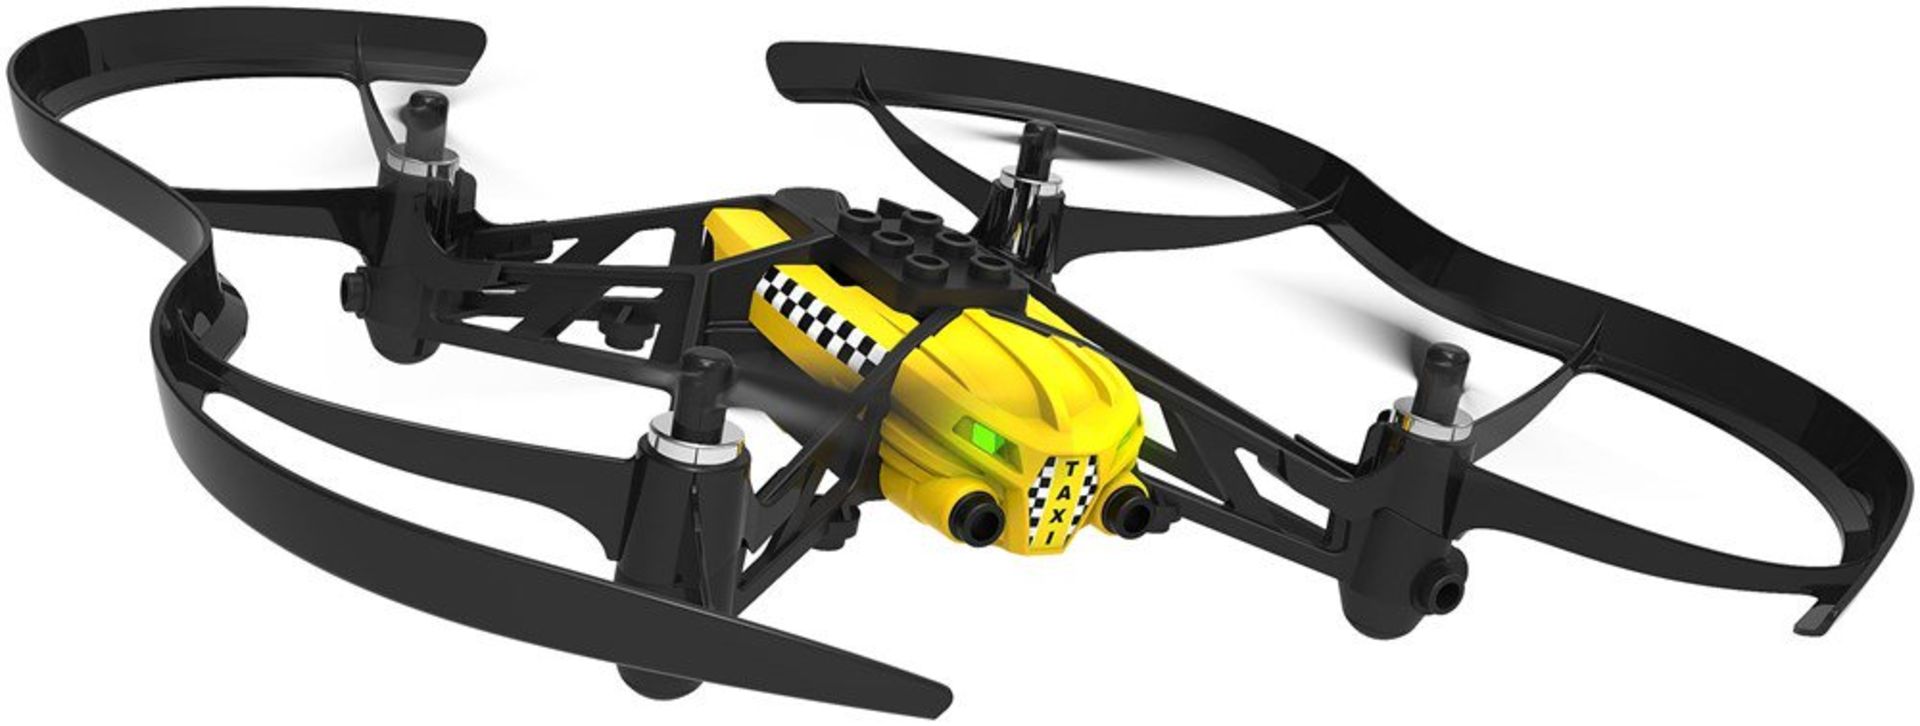 + VAT Brand New Parrot Minidrone Travis Airborn Smartphone Controlled Cargo Drone - 360 Degree